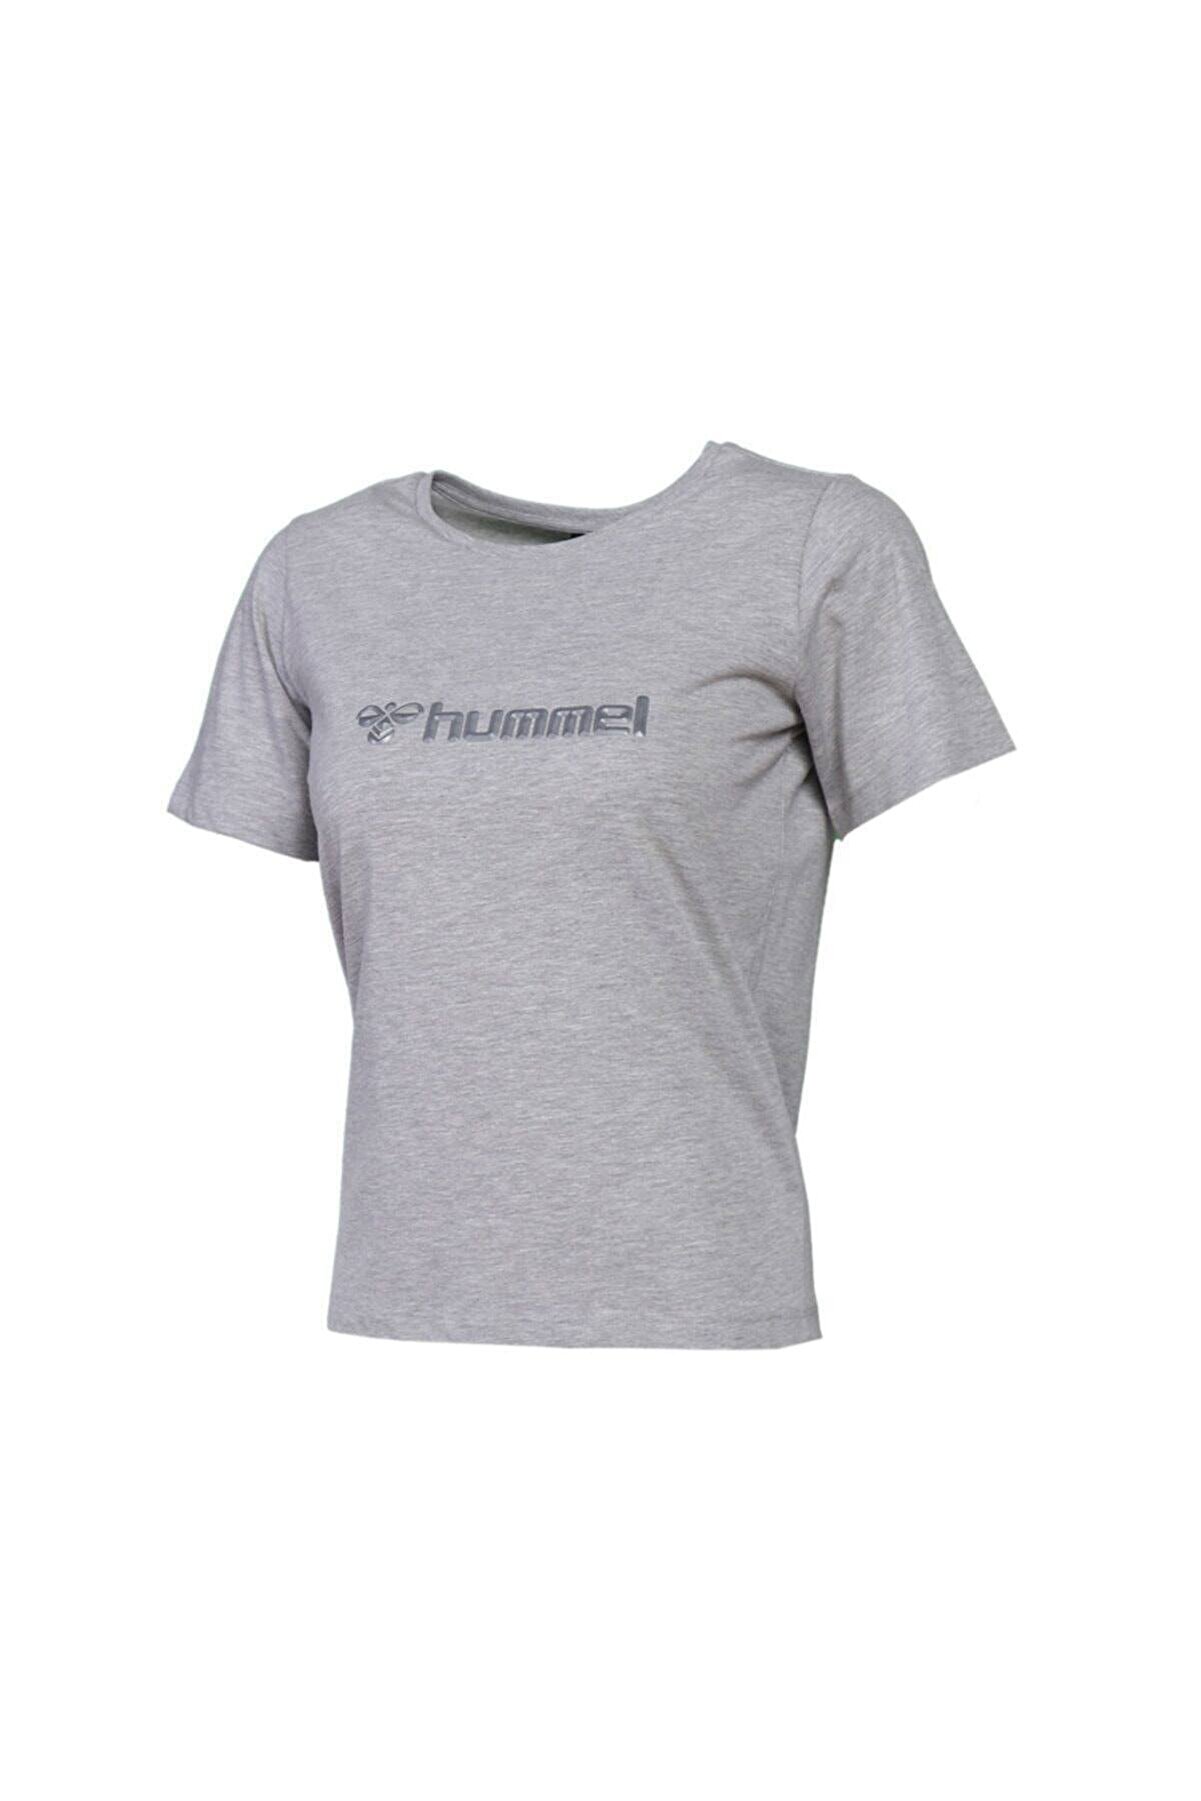 HUMMEL HMLPESCARA T-SHIRT A GRI MEL Kadın T-Shirt 101086314